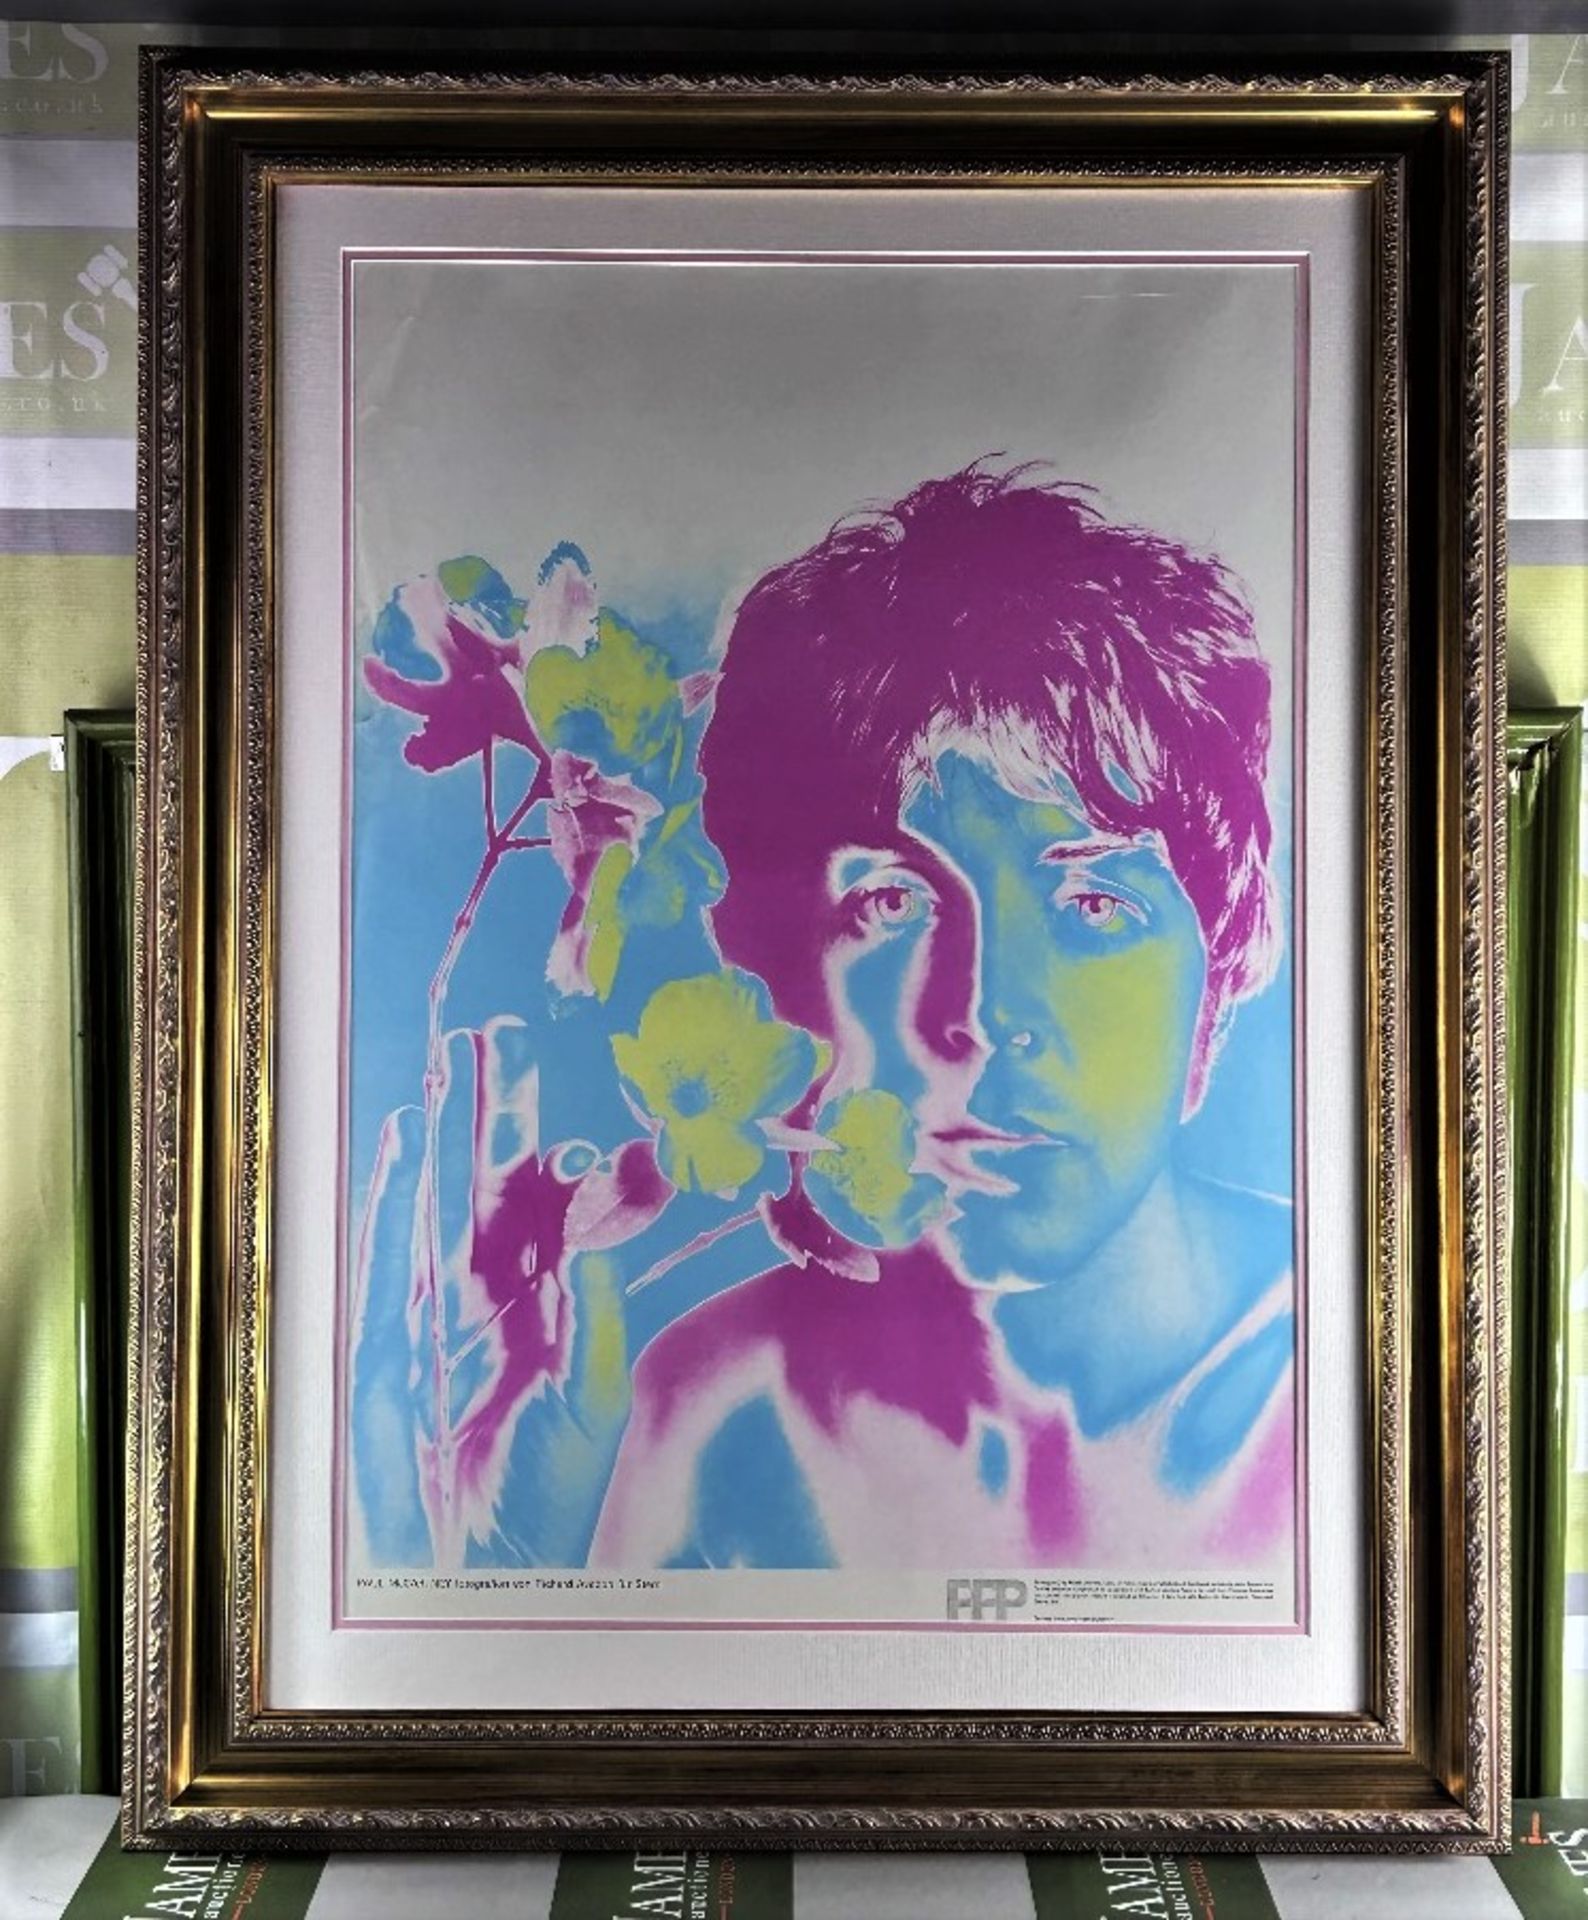 Original 1967 Vintage 'Paul McCartney' Beatles-Richard Avedon